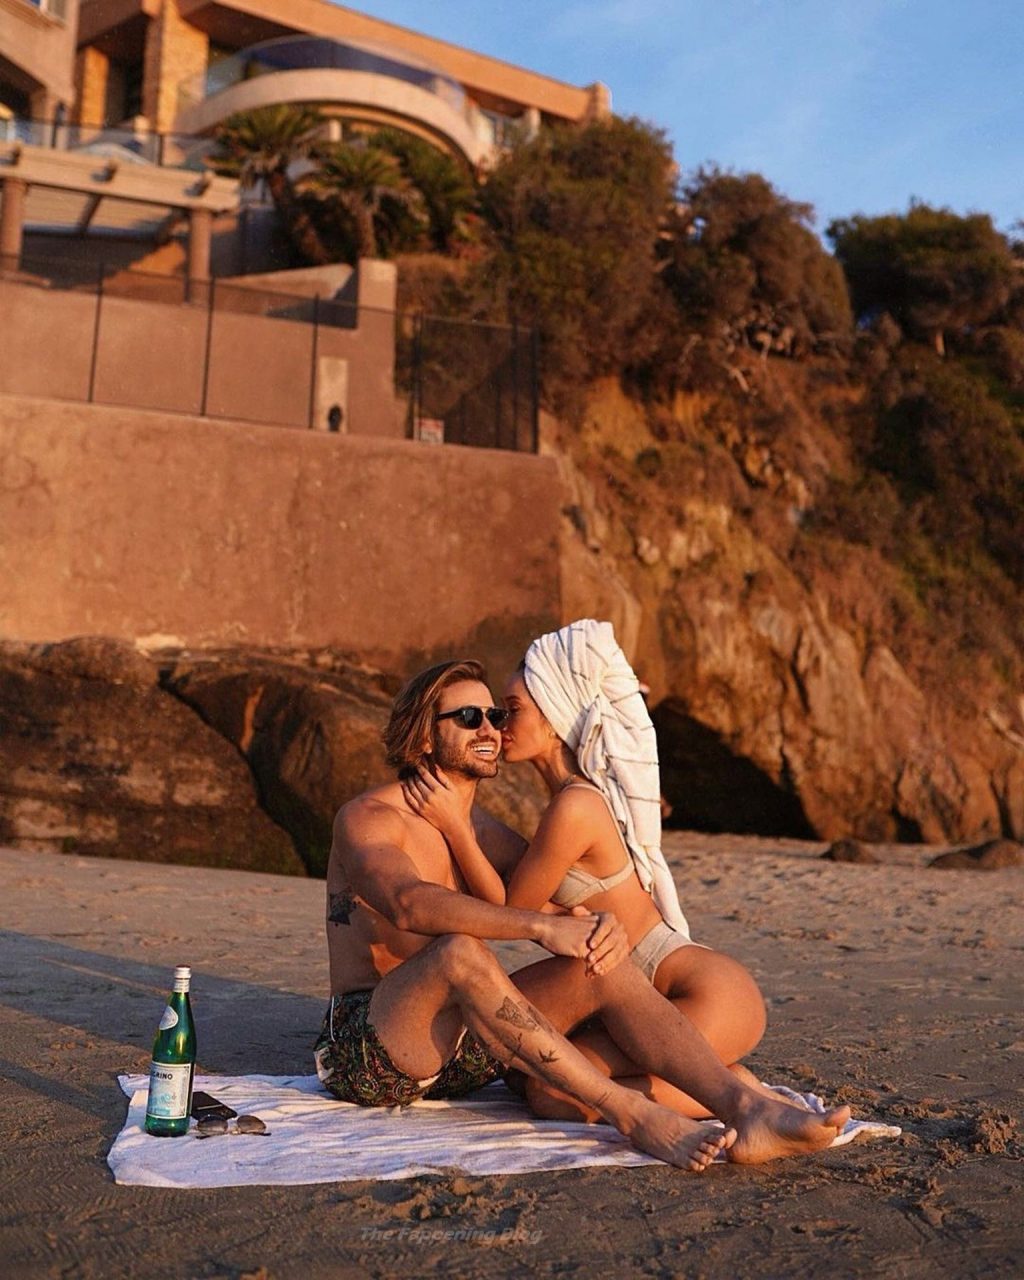 Sexy Robbi Jan Enjoys a Day with Alex Costa on the Beach (25 Photos)